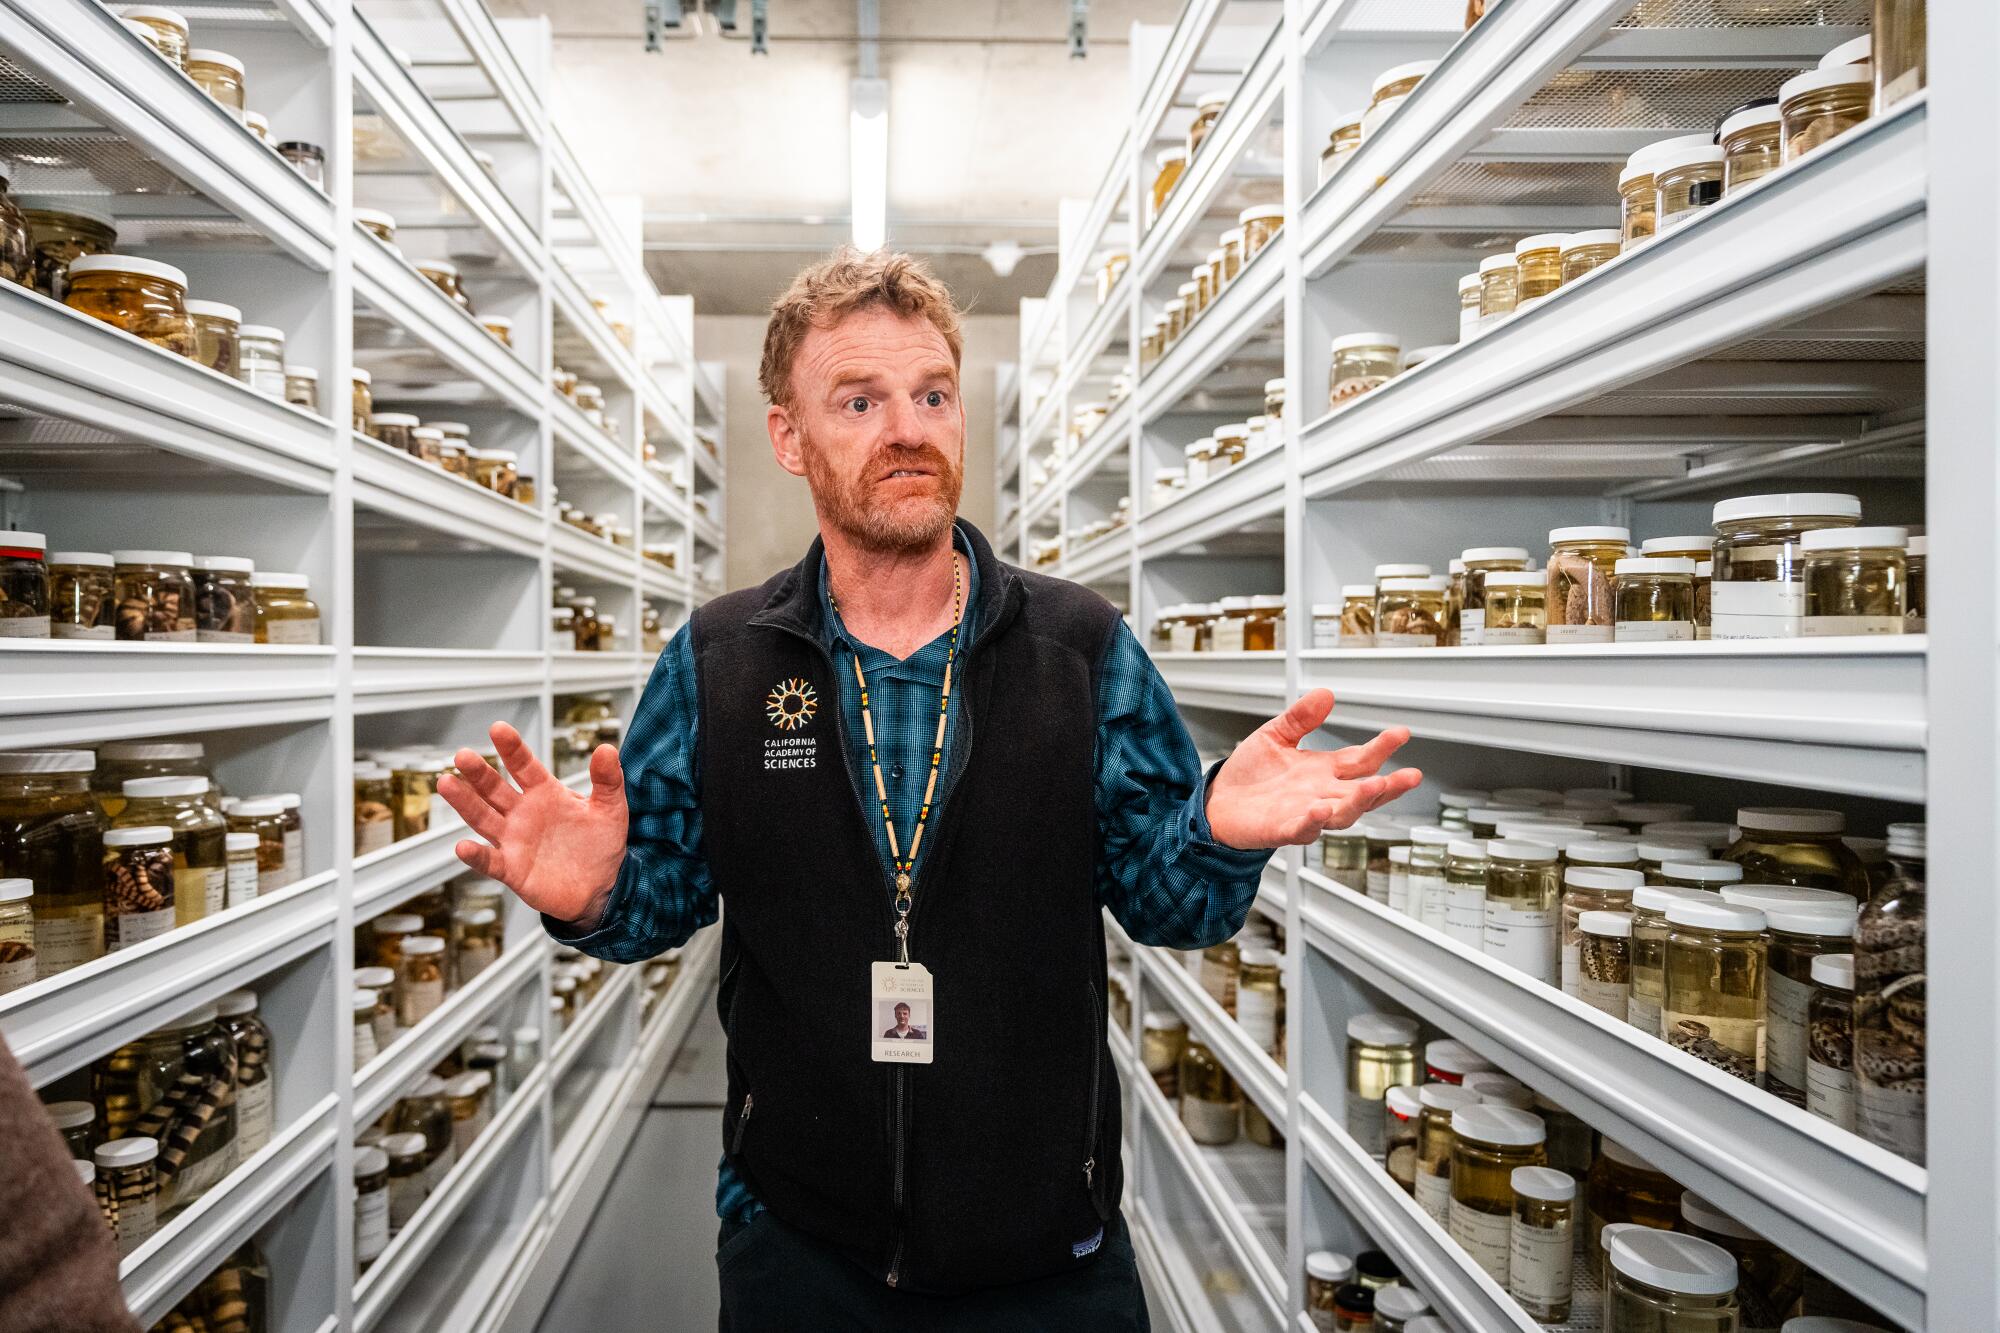 A man stands amid shelves of snake specimens.